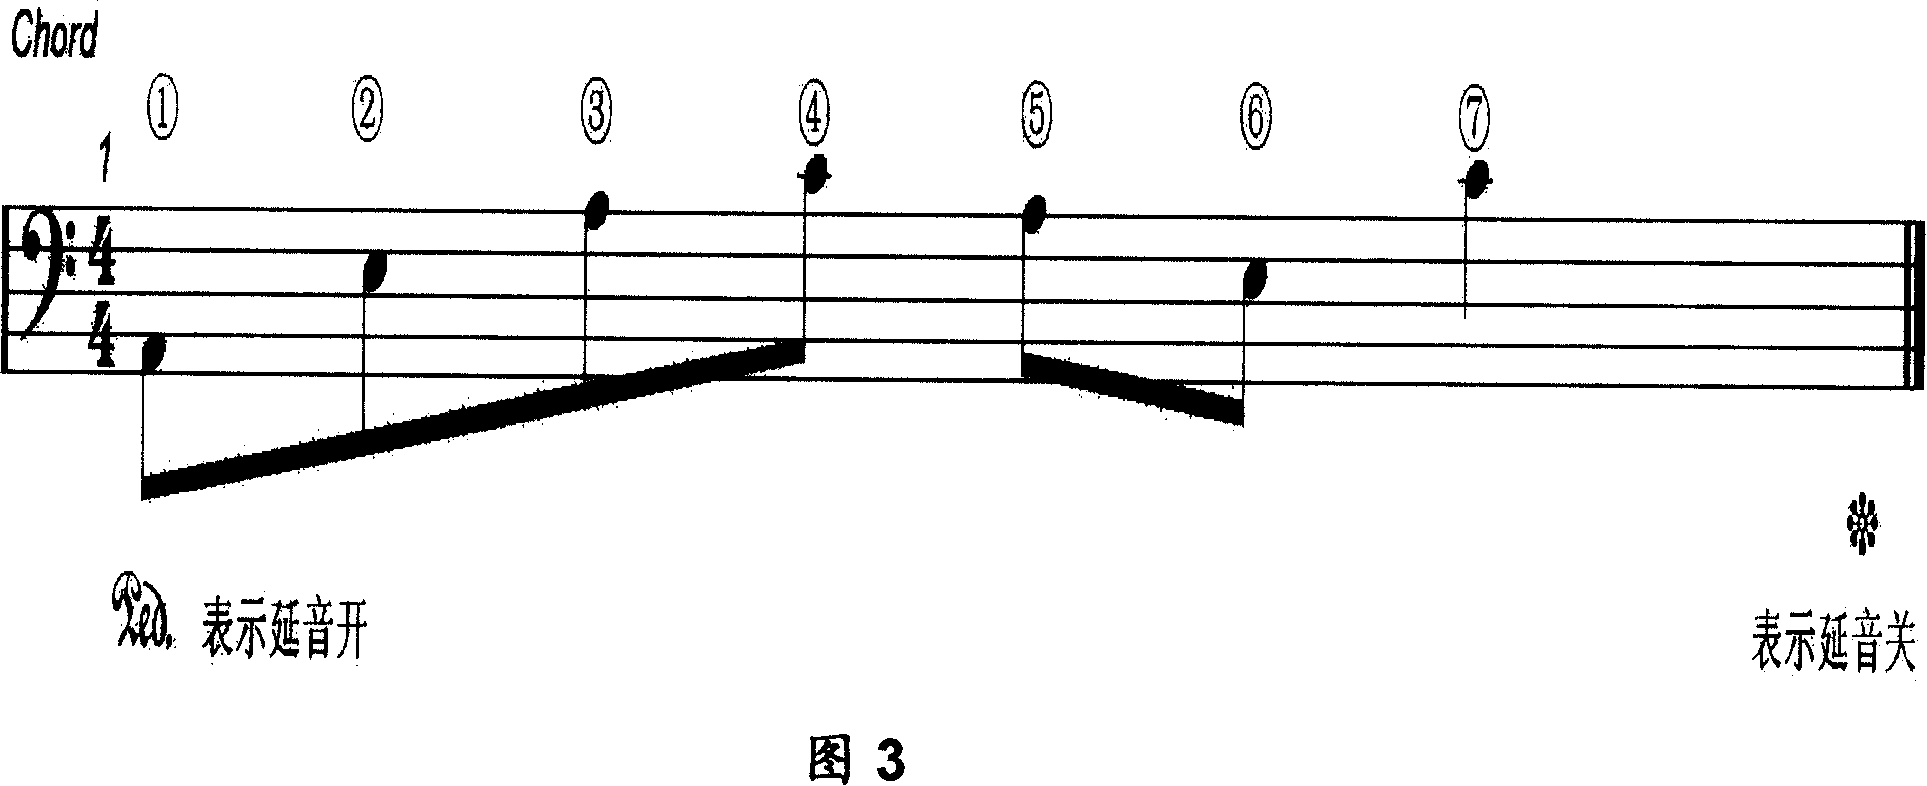 Method for improving effective chord based on MIDI